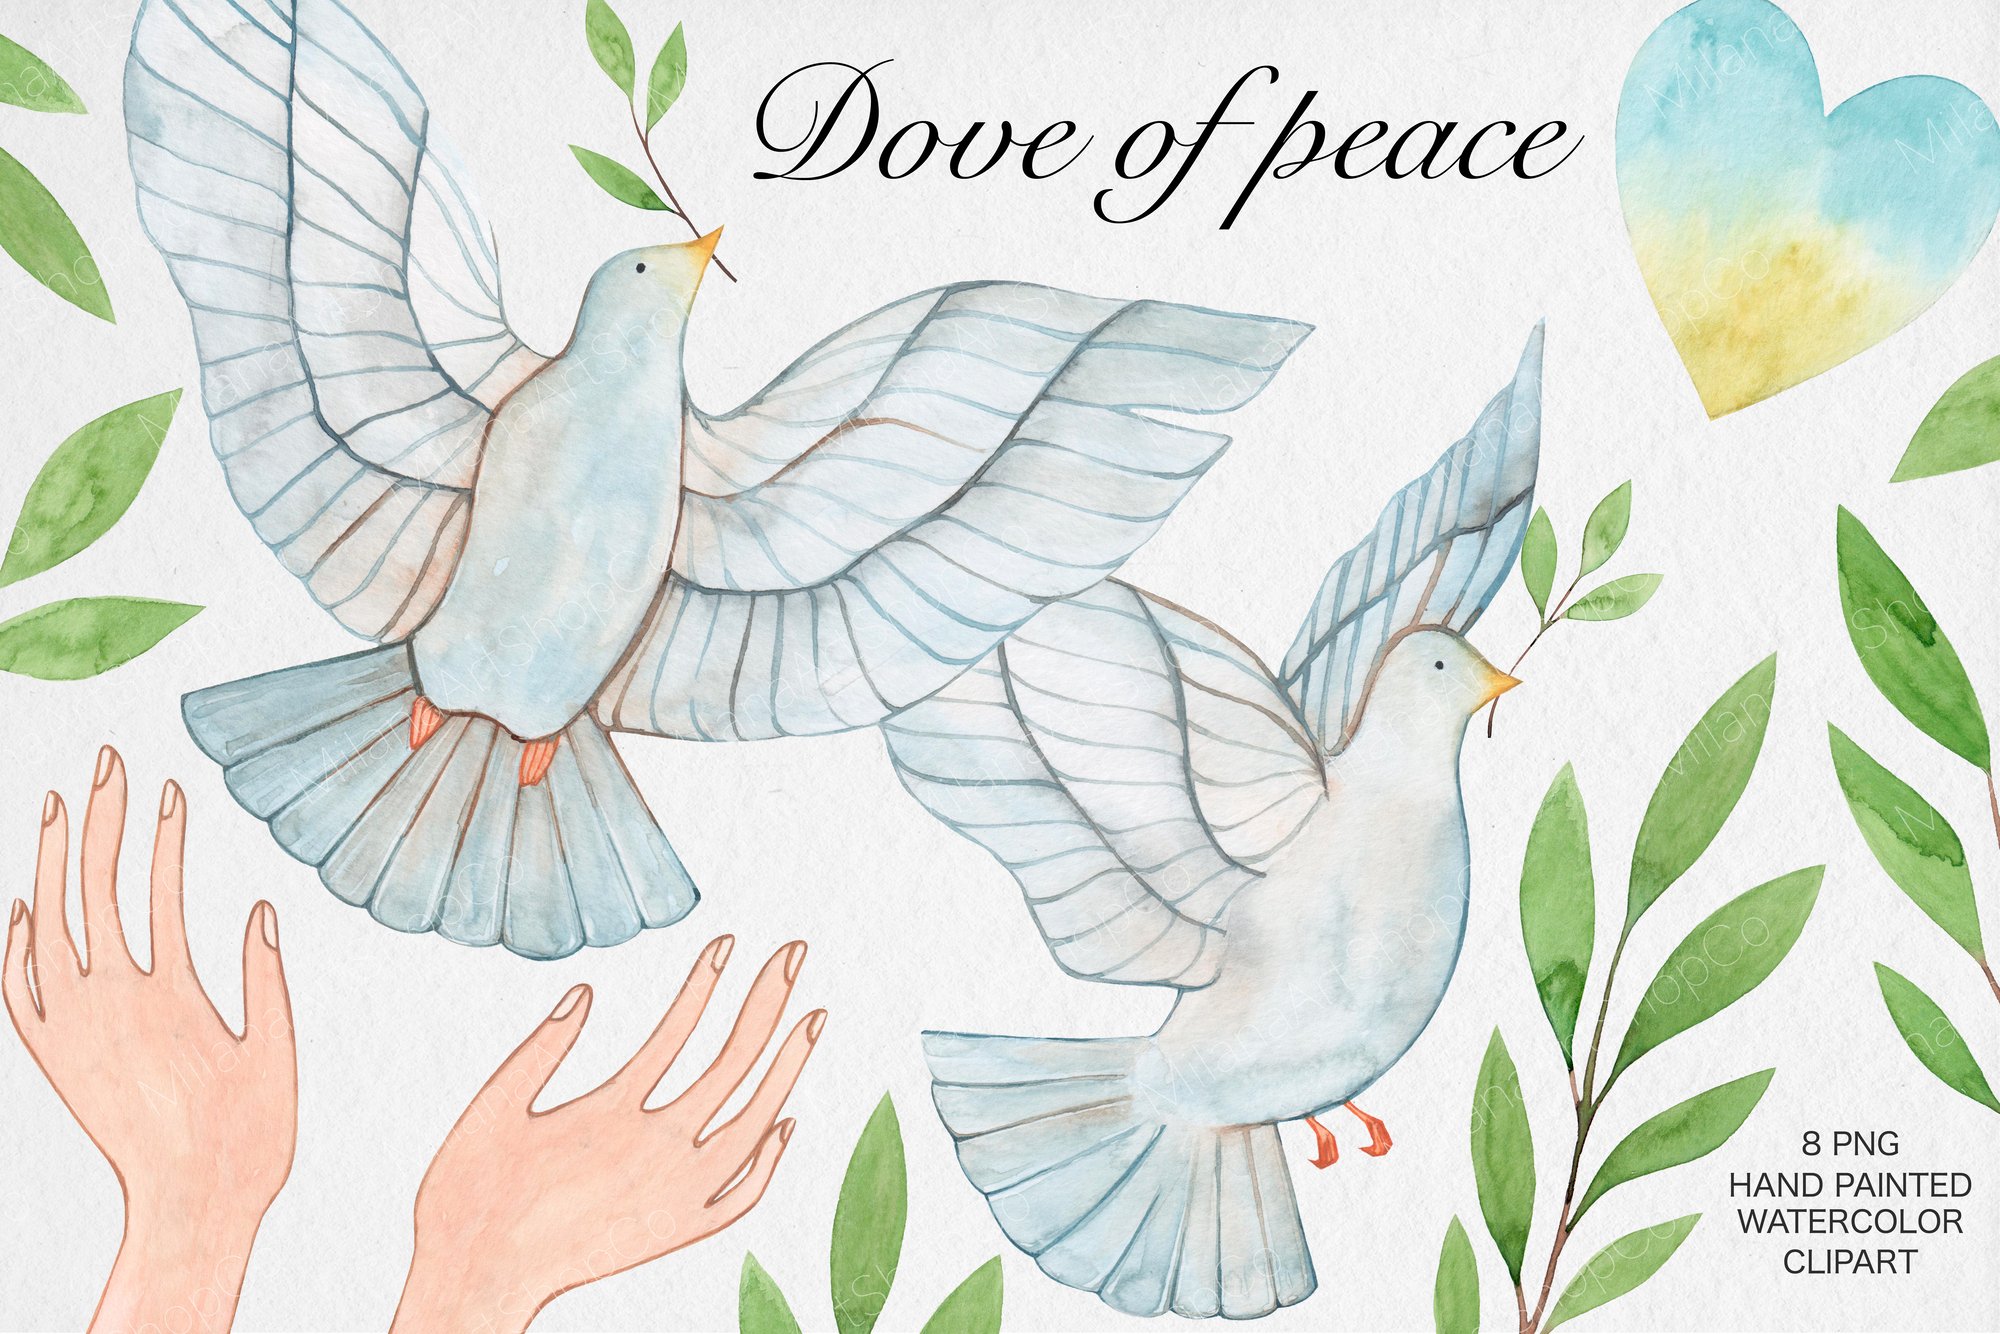 Watercolor Dove of Peace for Ukraine cover image.